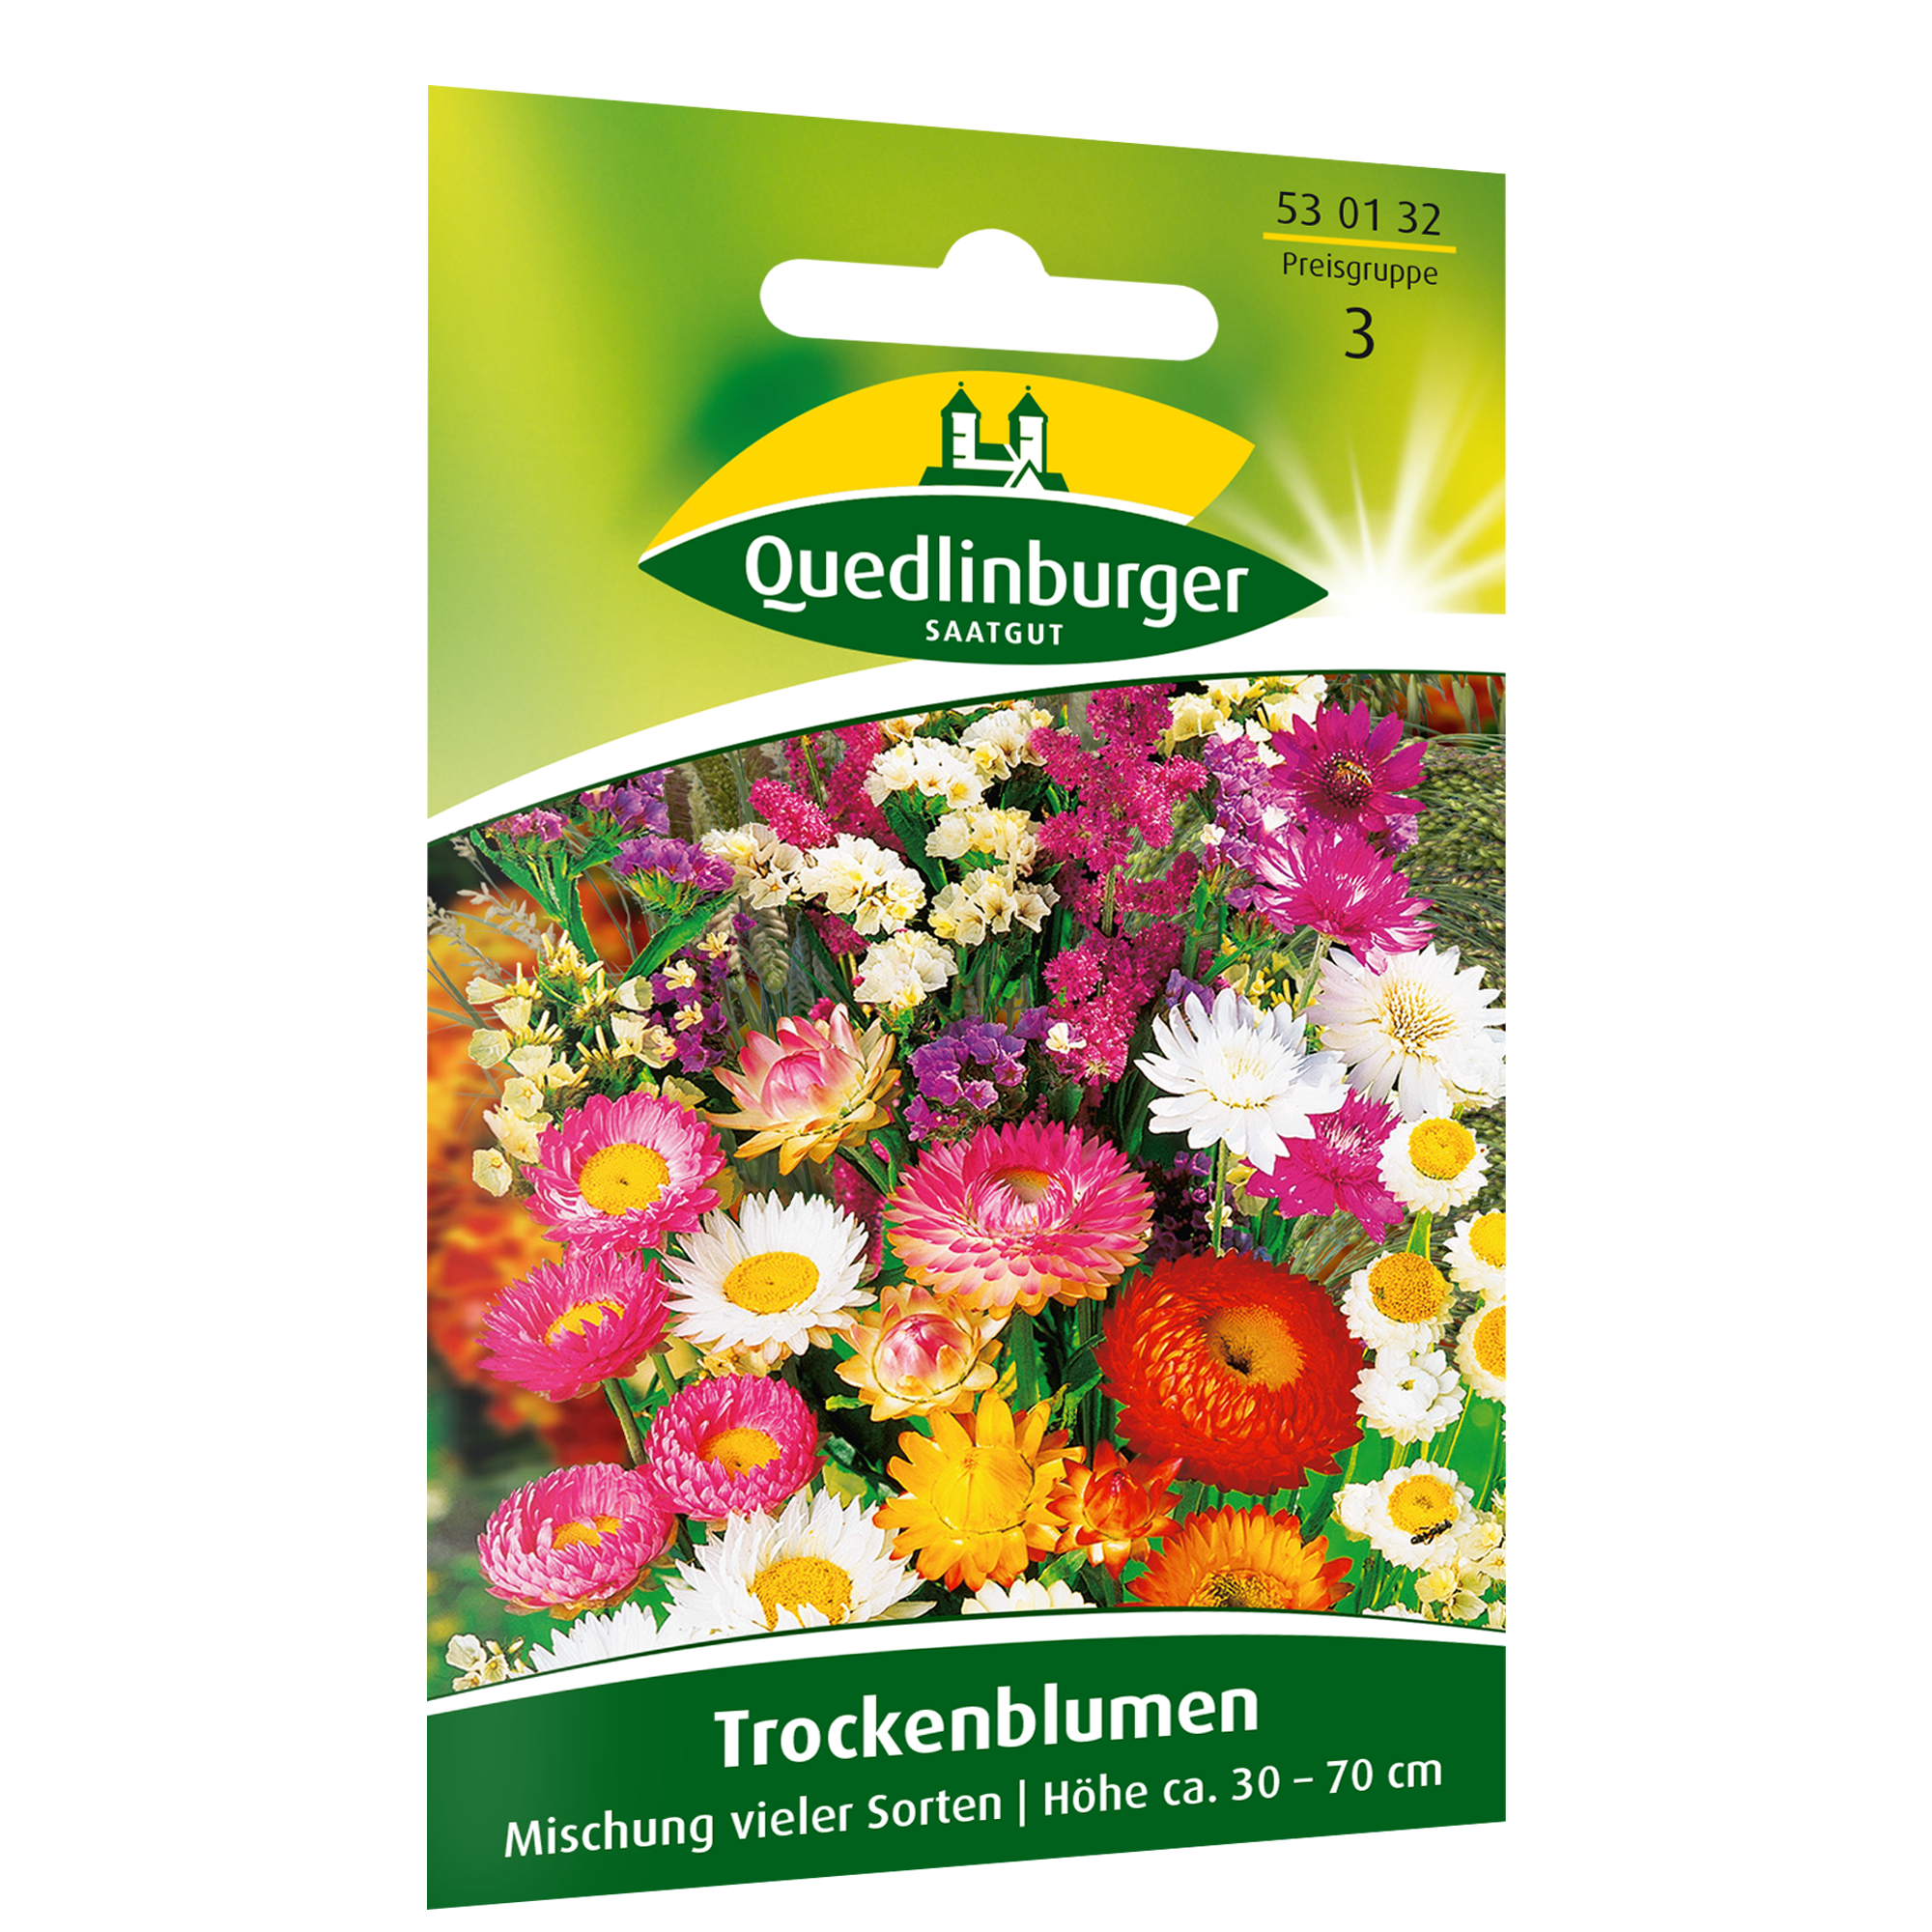 Blumenmischung 'Trockenblumen' + product picture